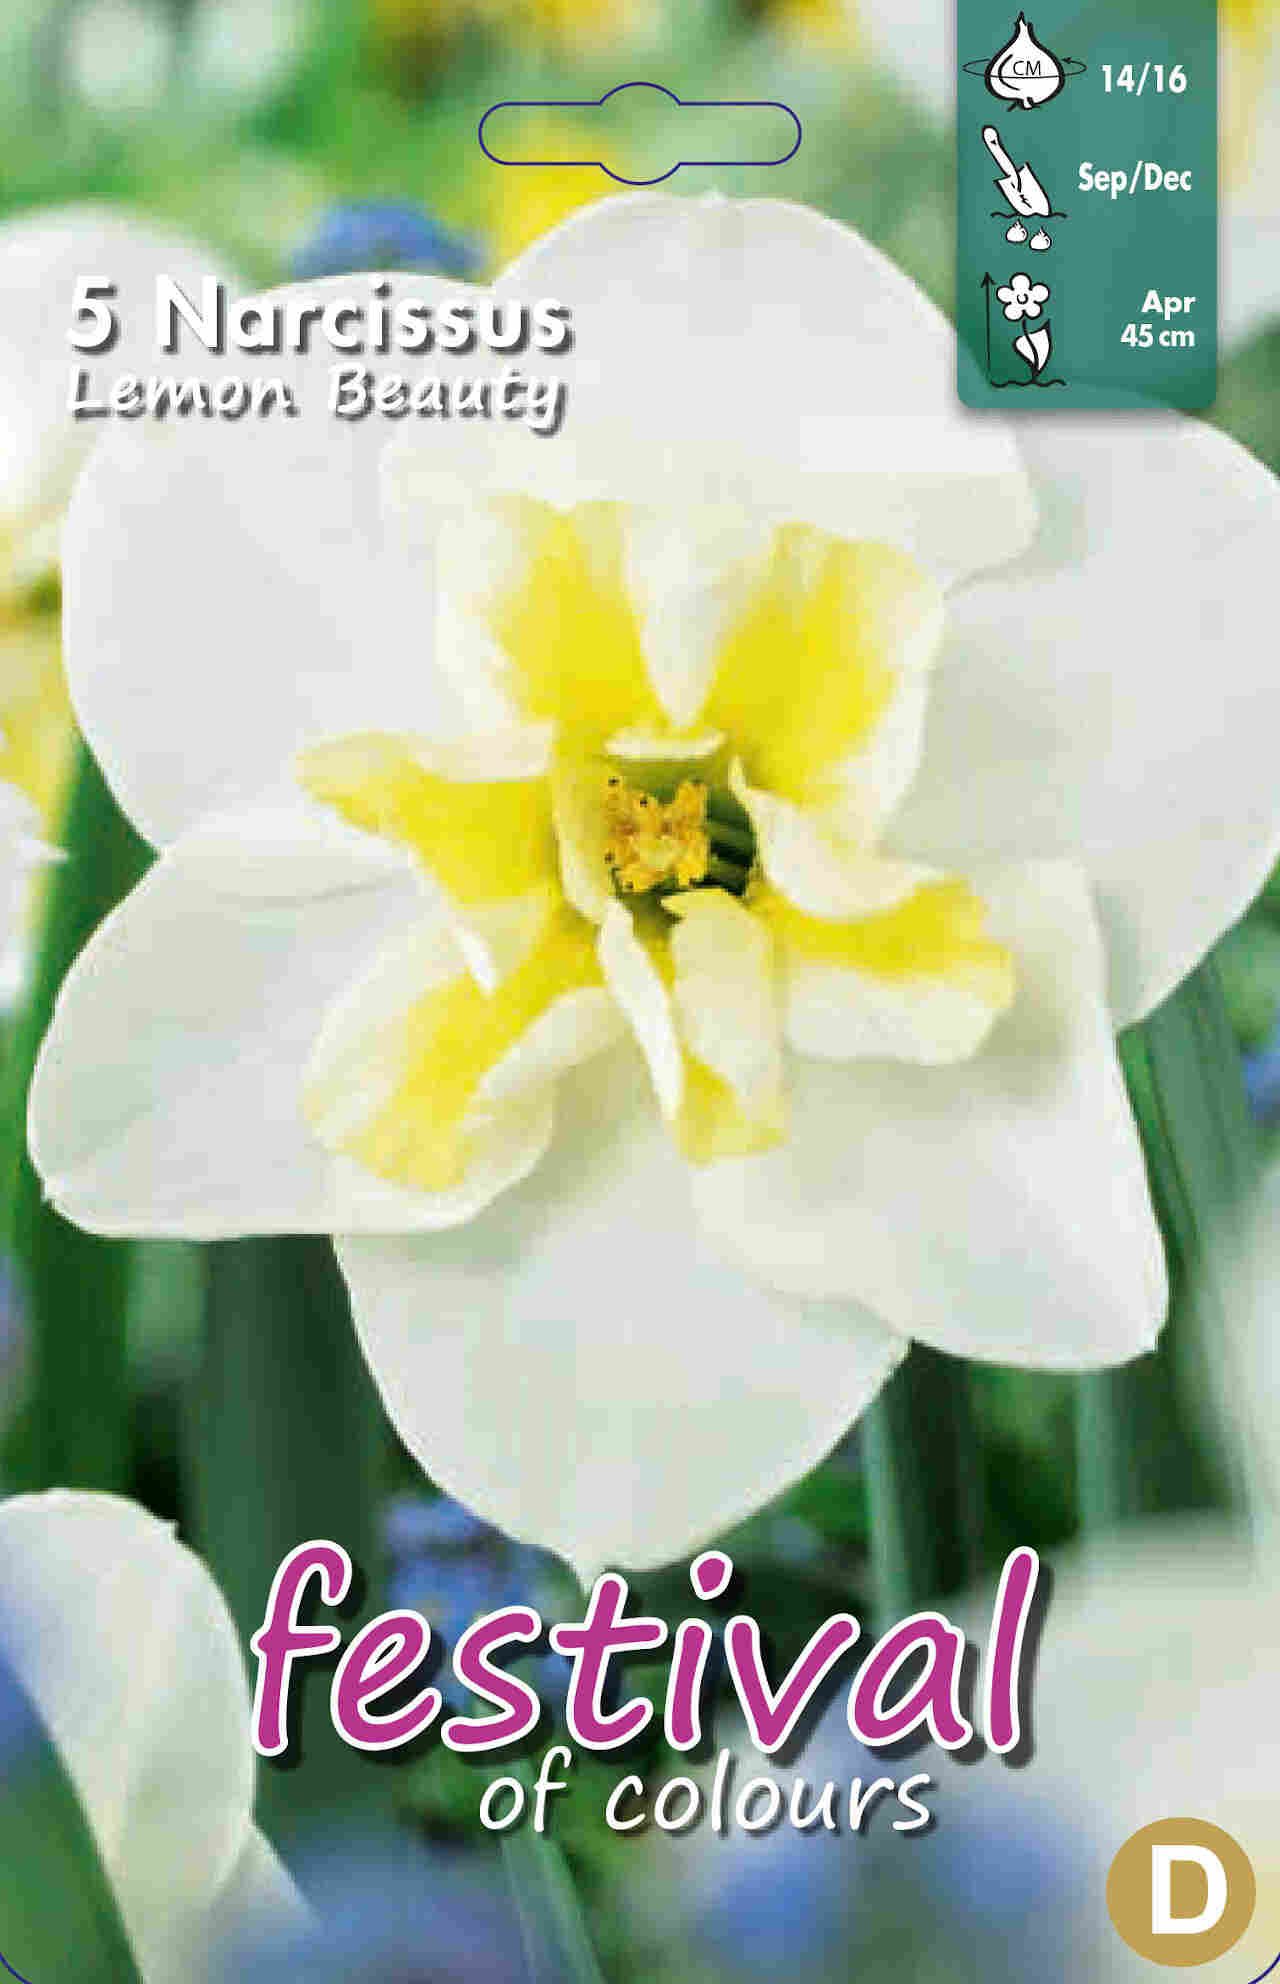 Påskelilje løg - Narcissus Lemon Beauty 14/16